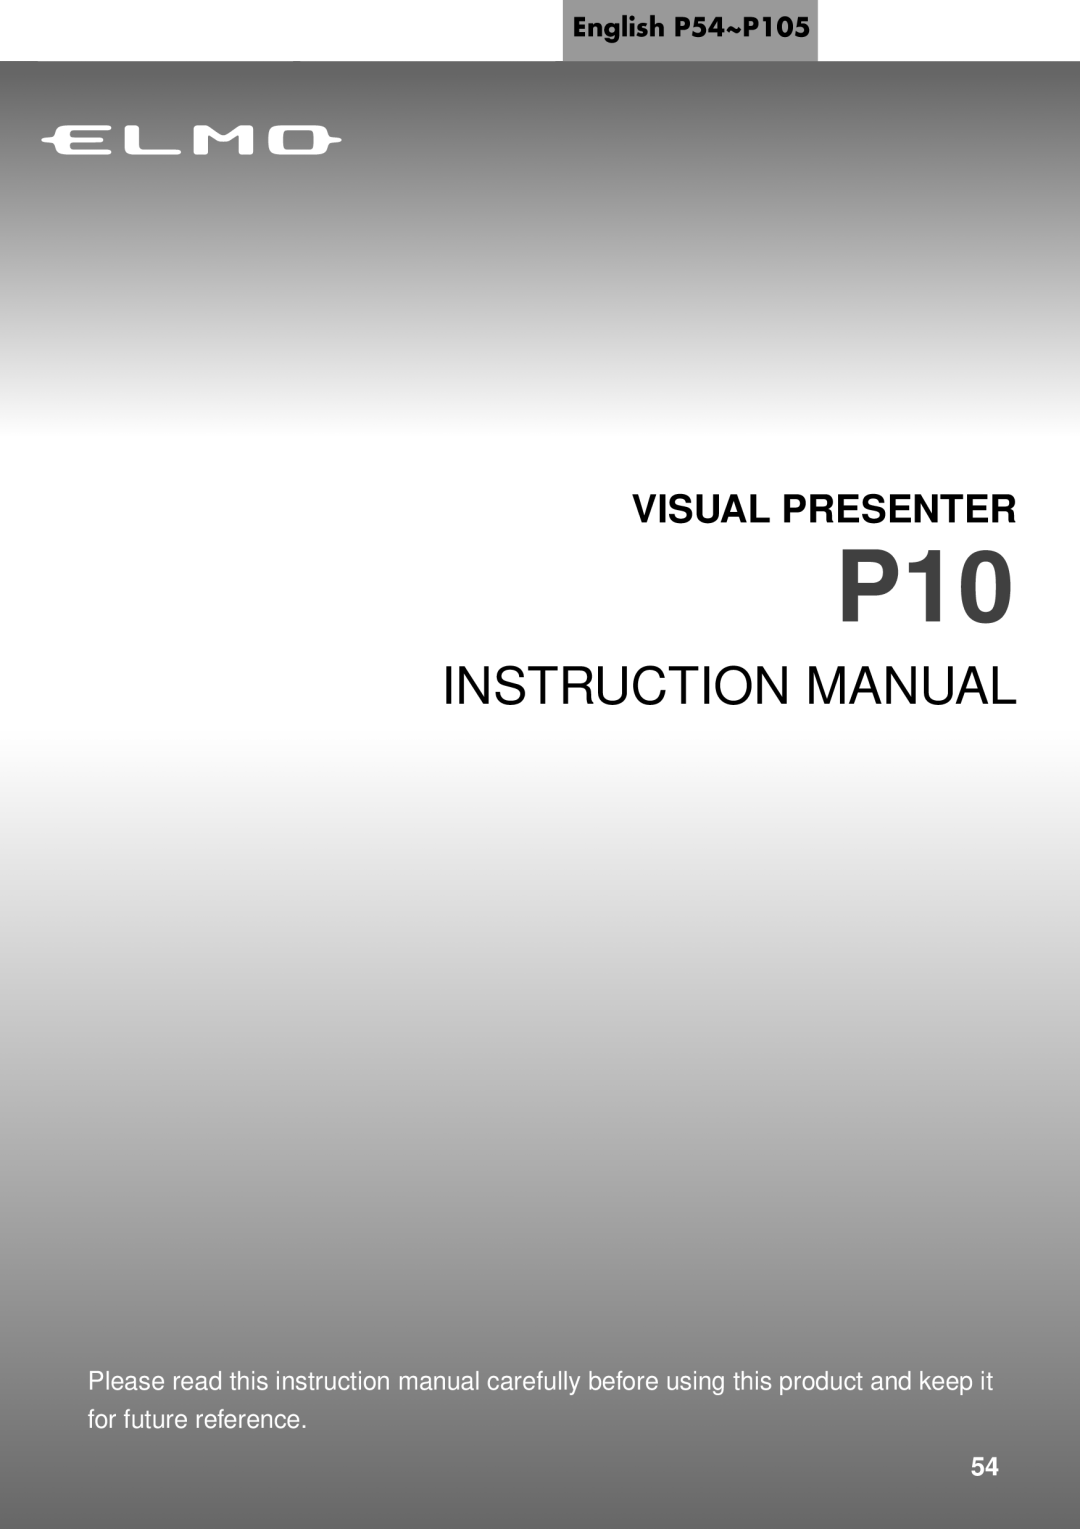 Elmo p10 instruction manual Français P000~P000, Deutch P000~P000, English P54~P105, P00~P00, Instruction Manual 